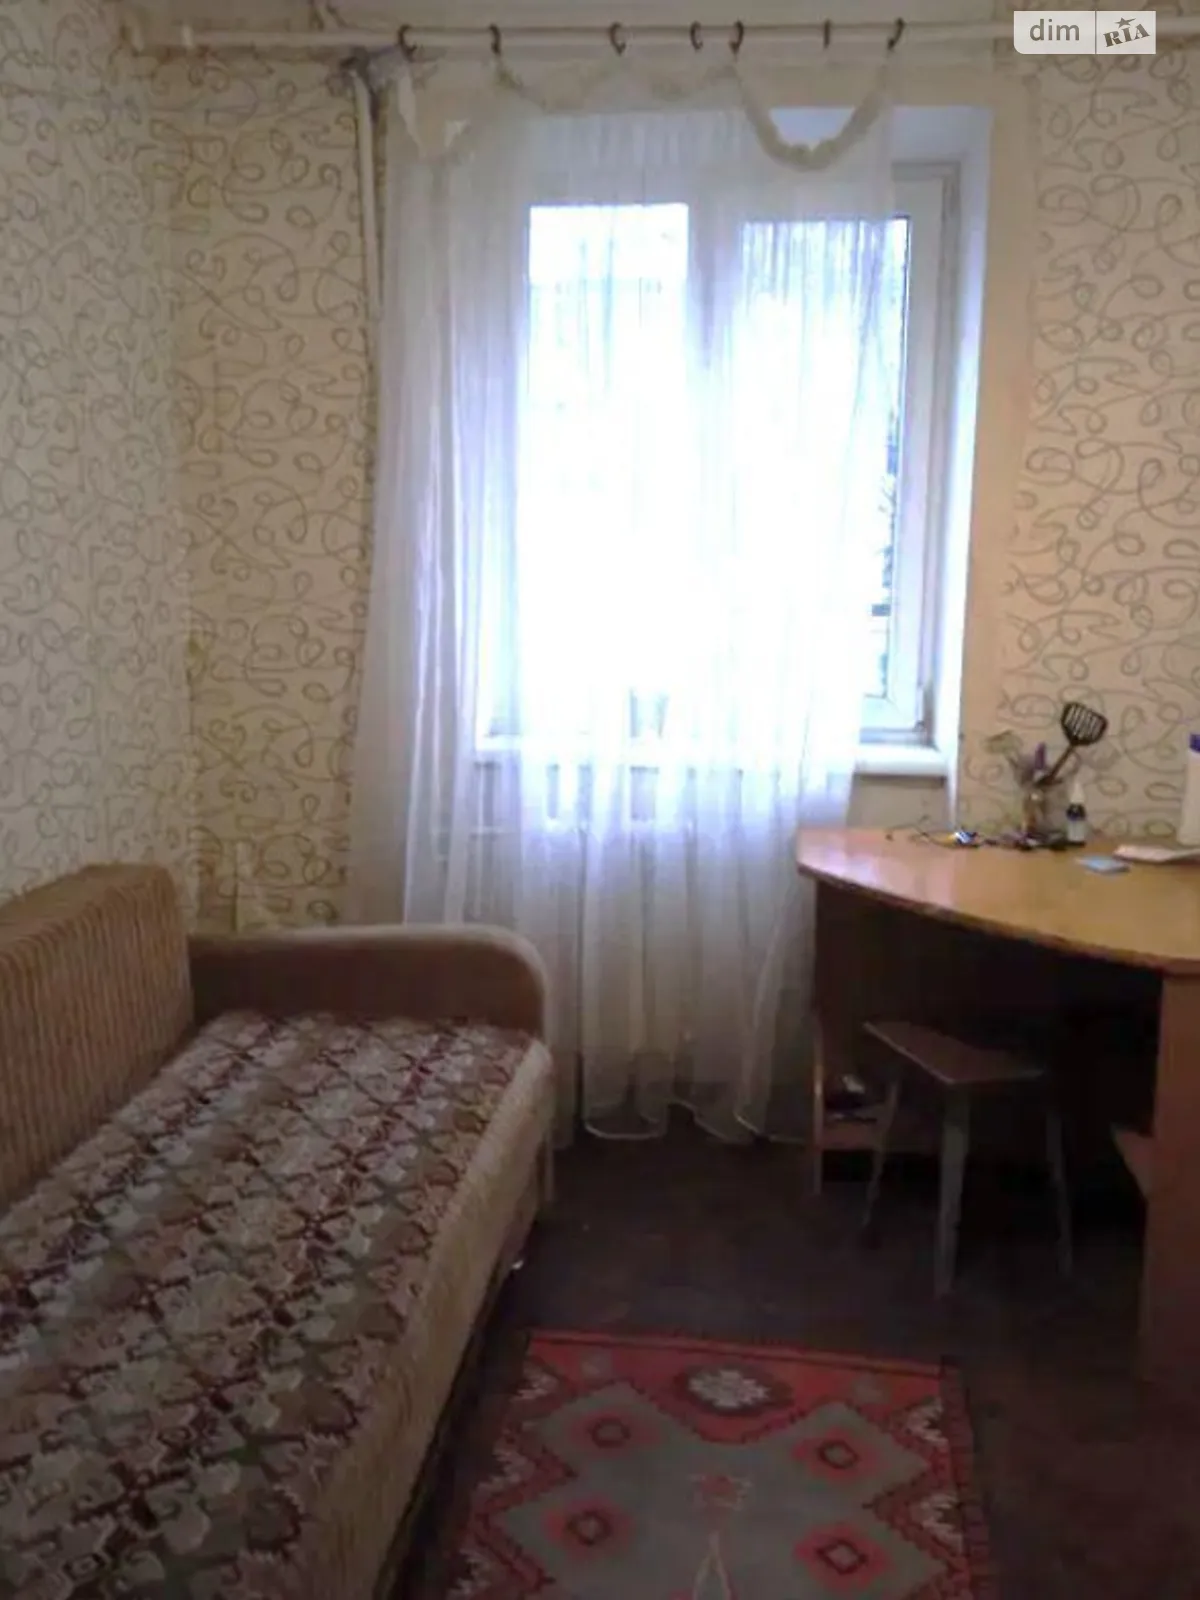 Продается комната 65 кв. м в Одессе, цена: 6000 $ - фото 1